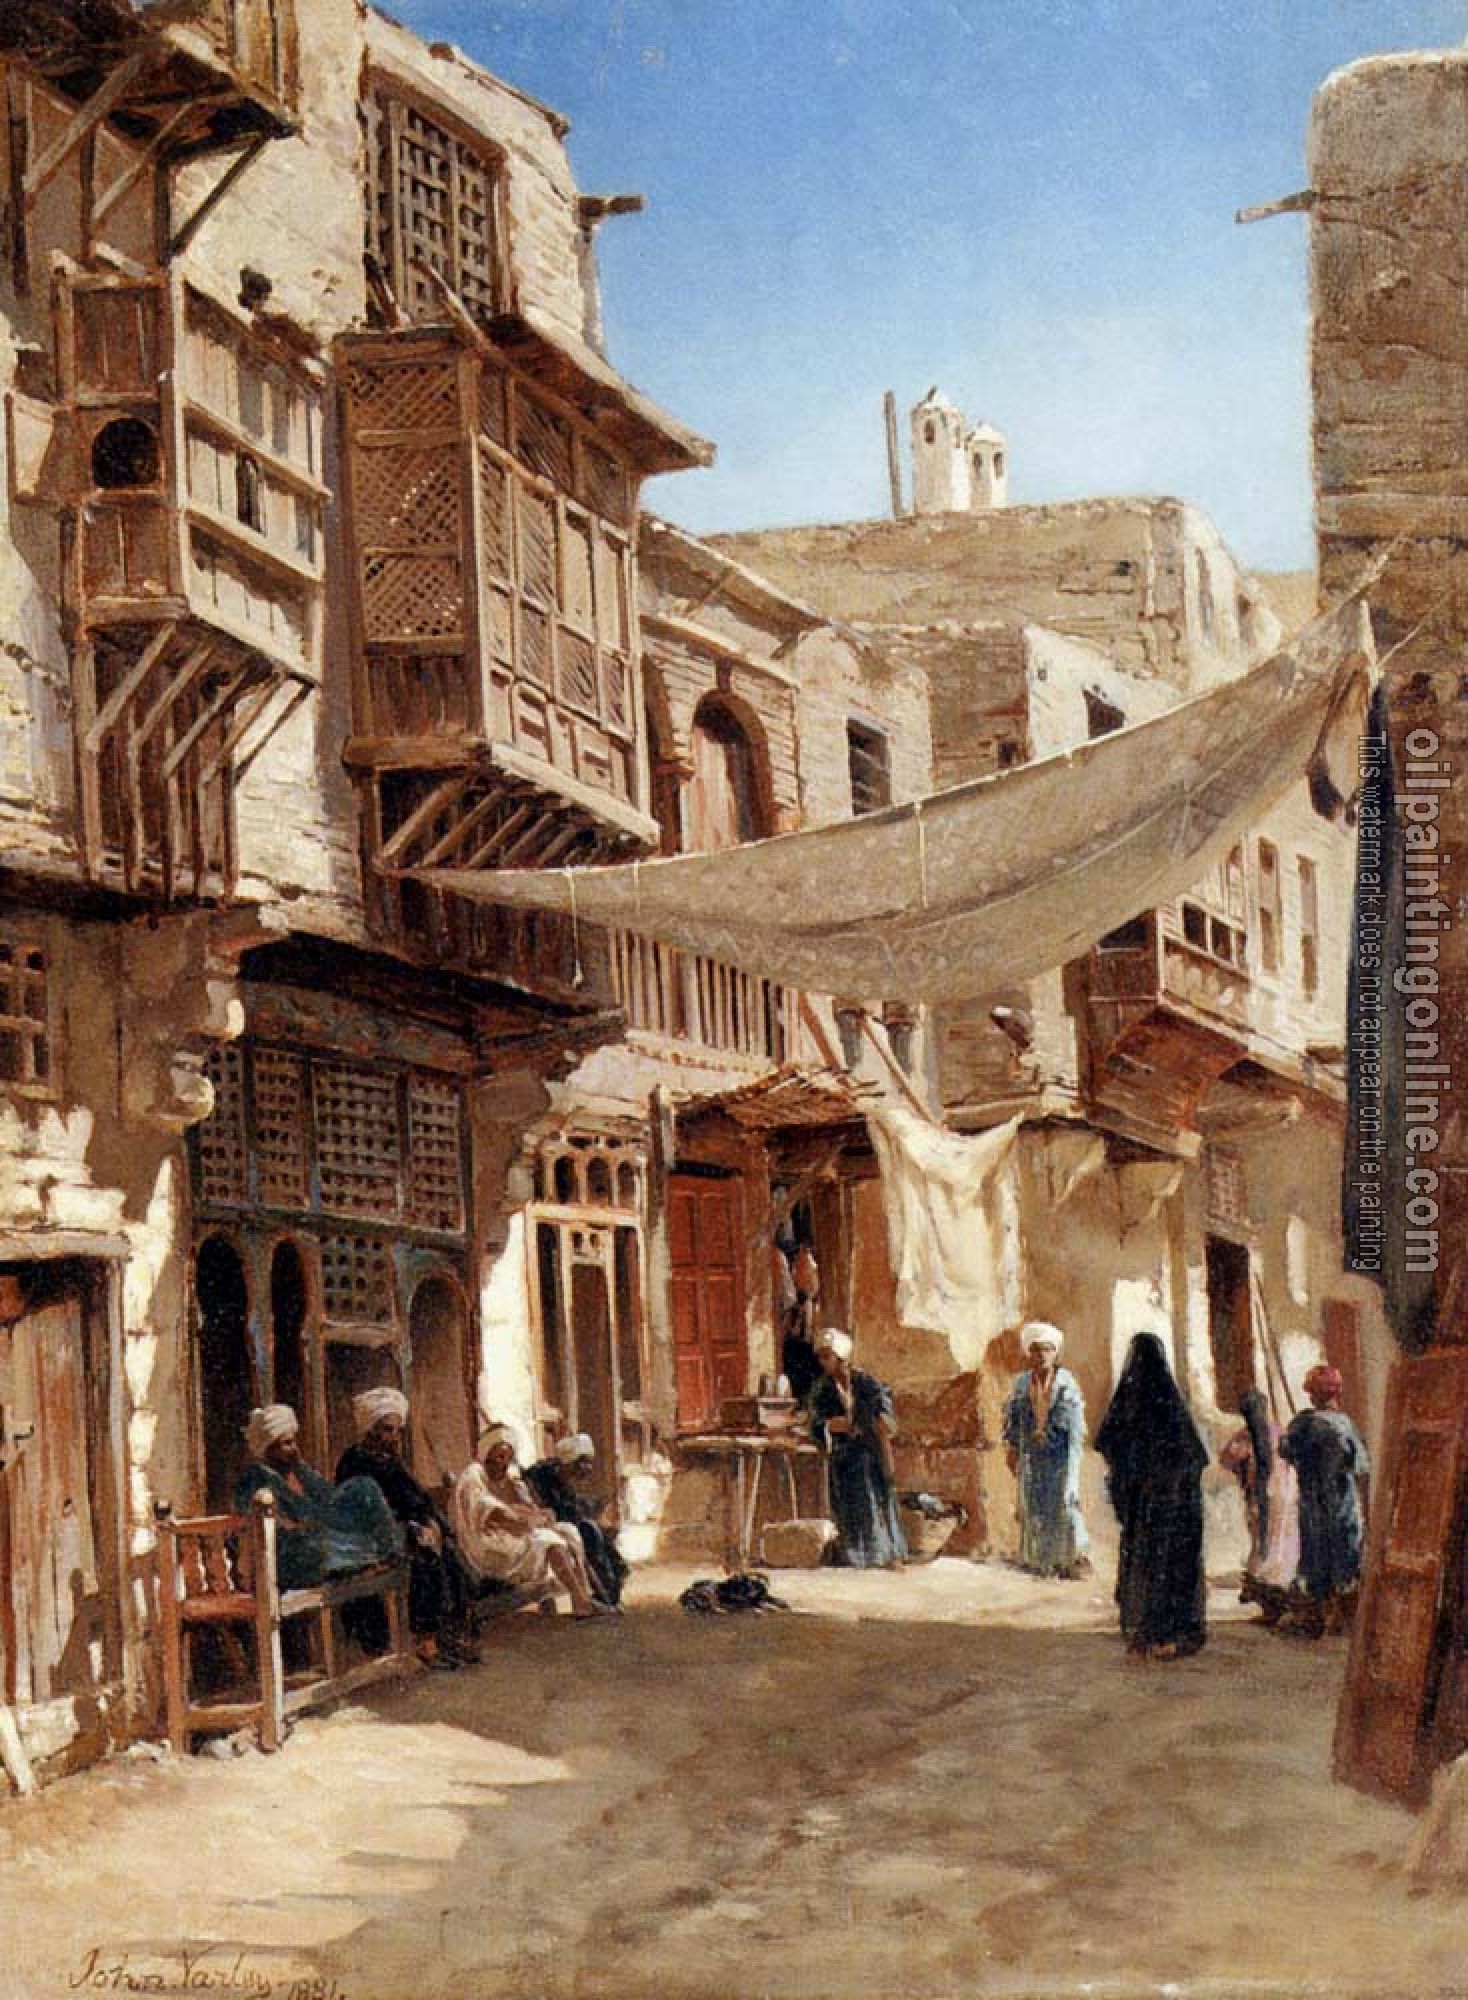 John Varley - A Street In Boulaq Near Cairo